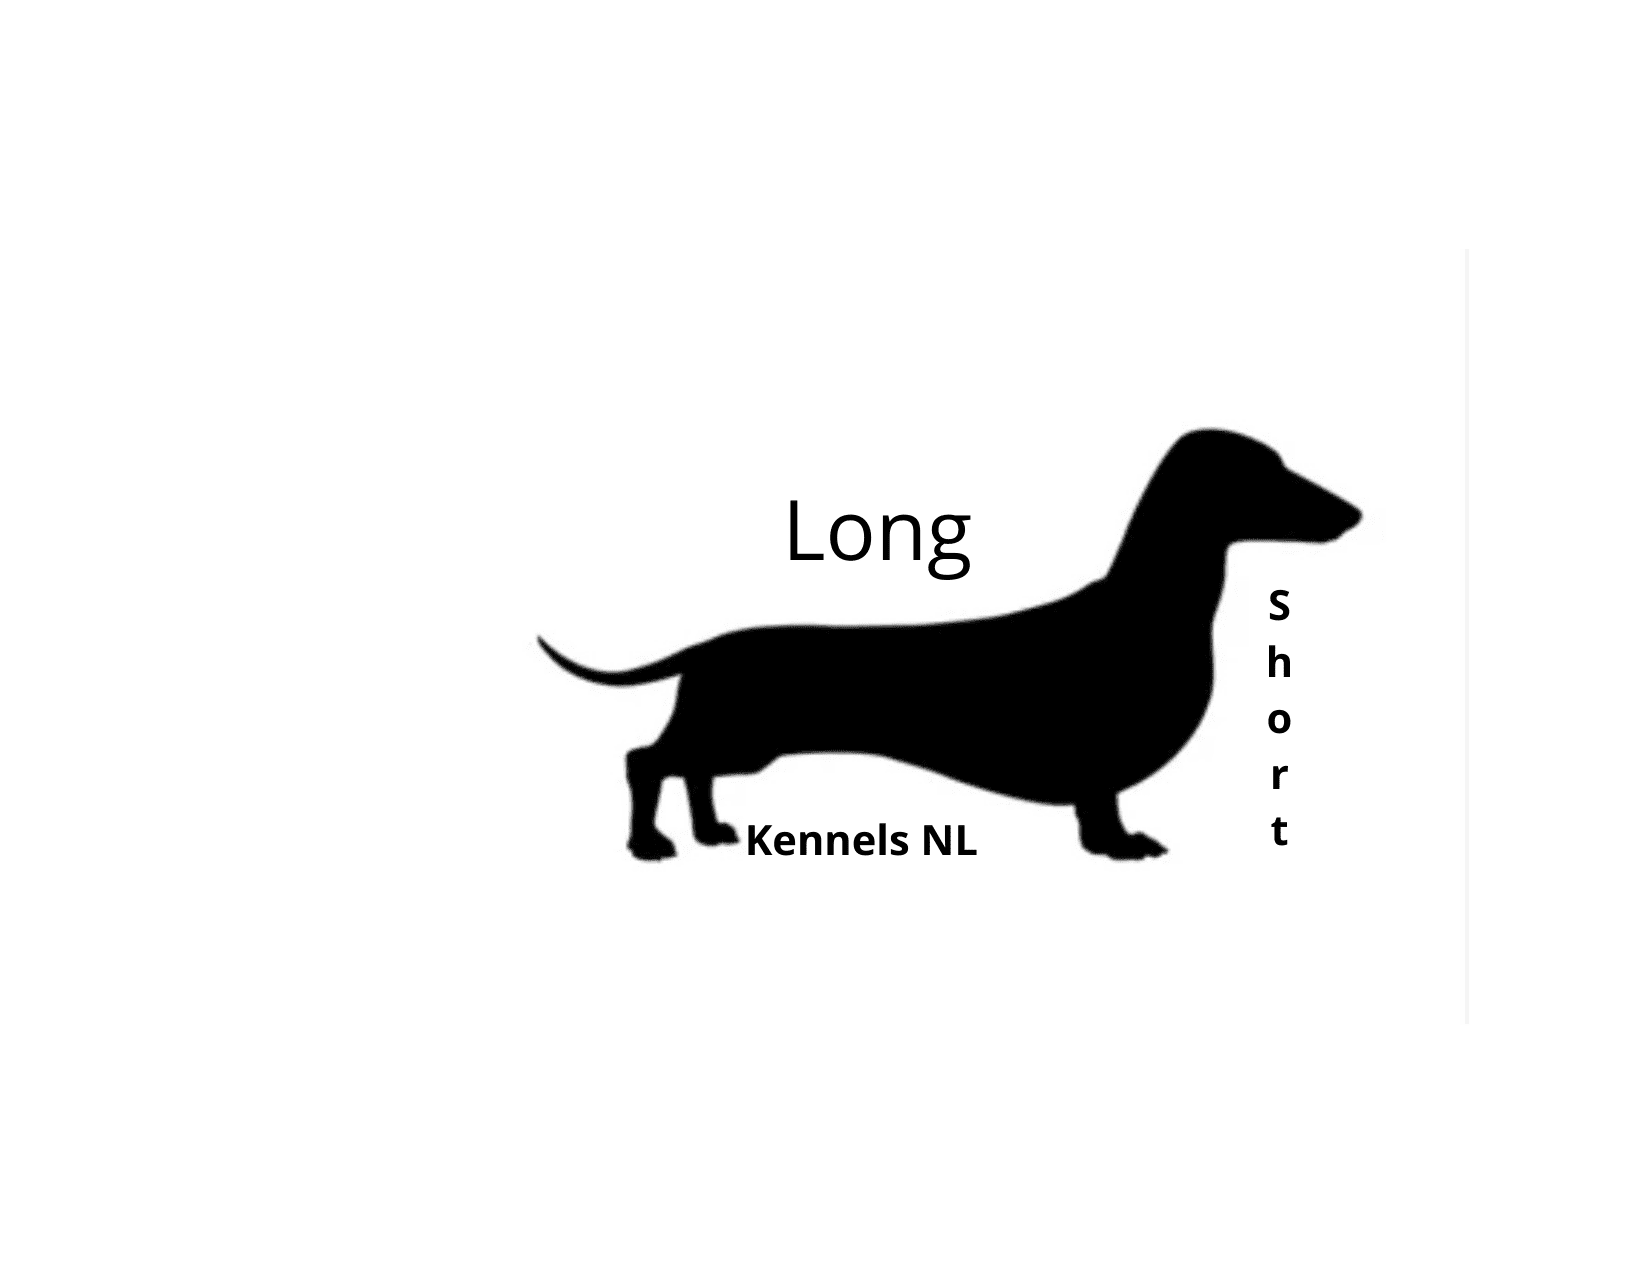 Long Short Kennels NL